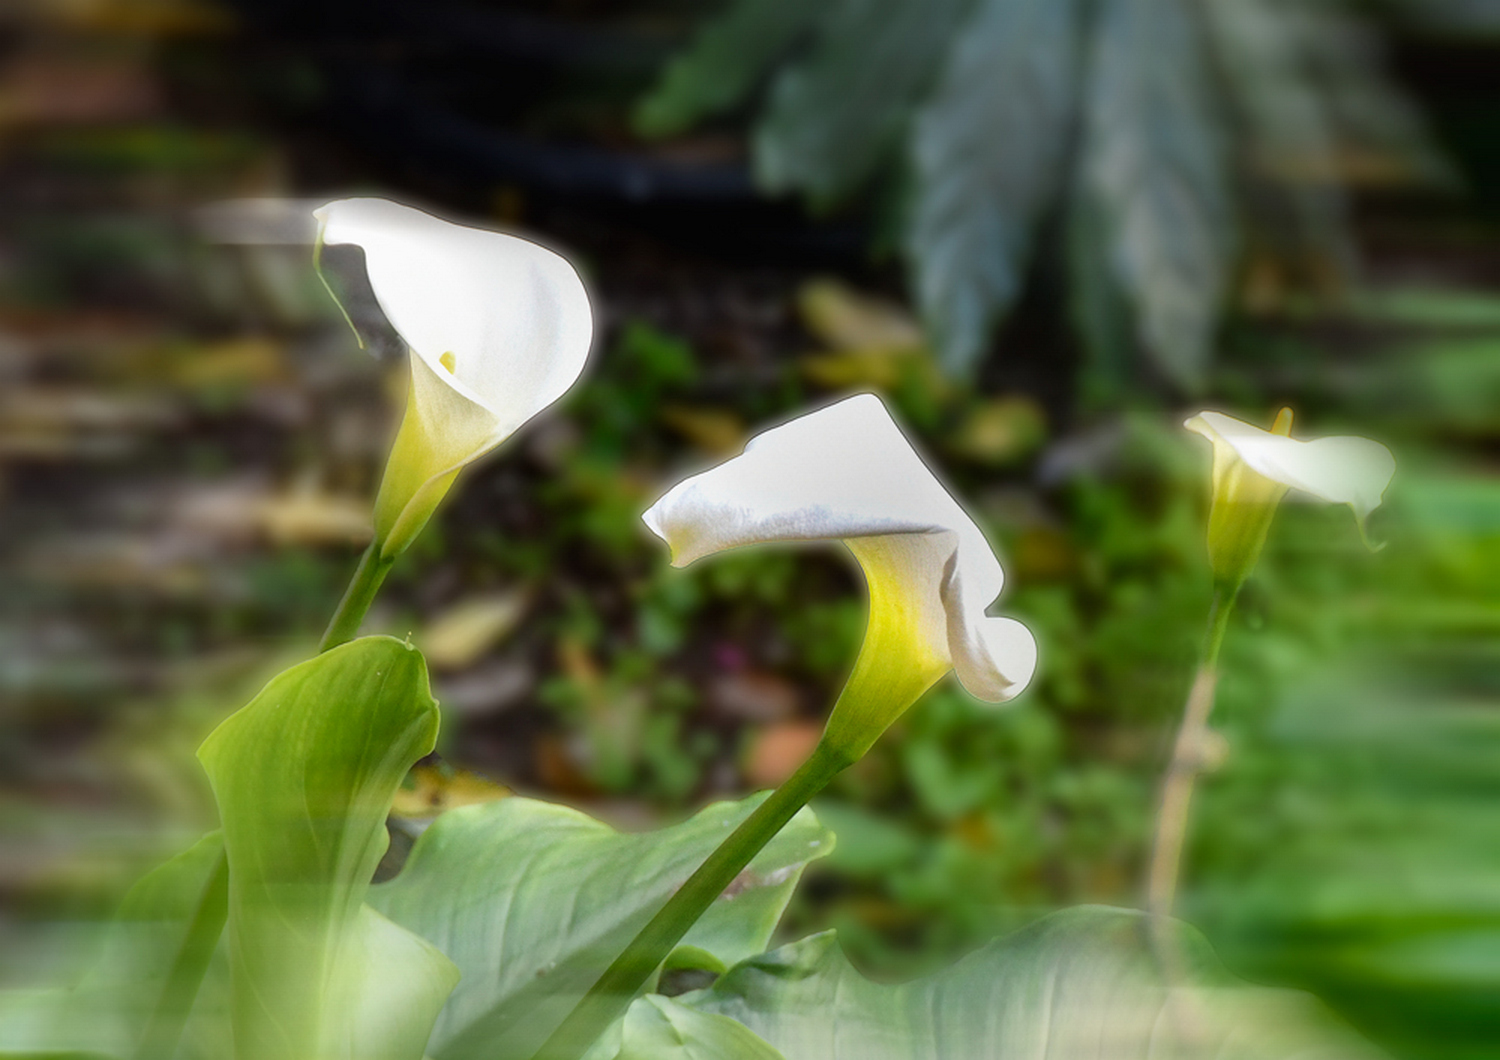 The three calla lilies.....